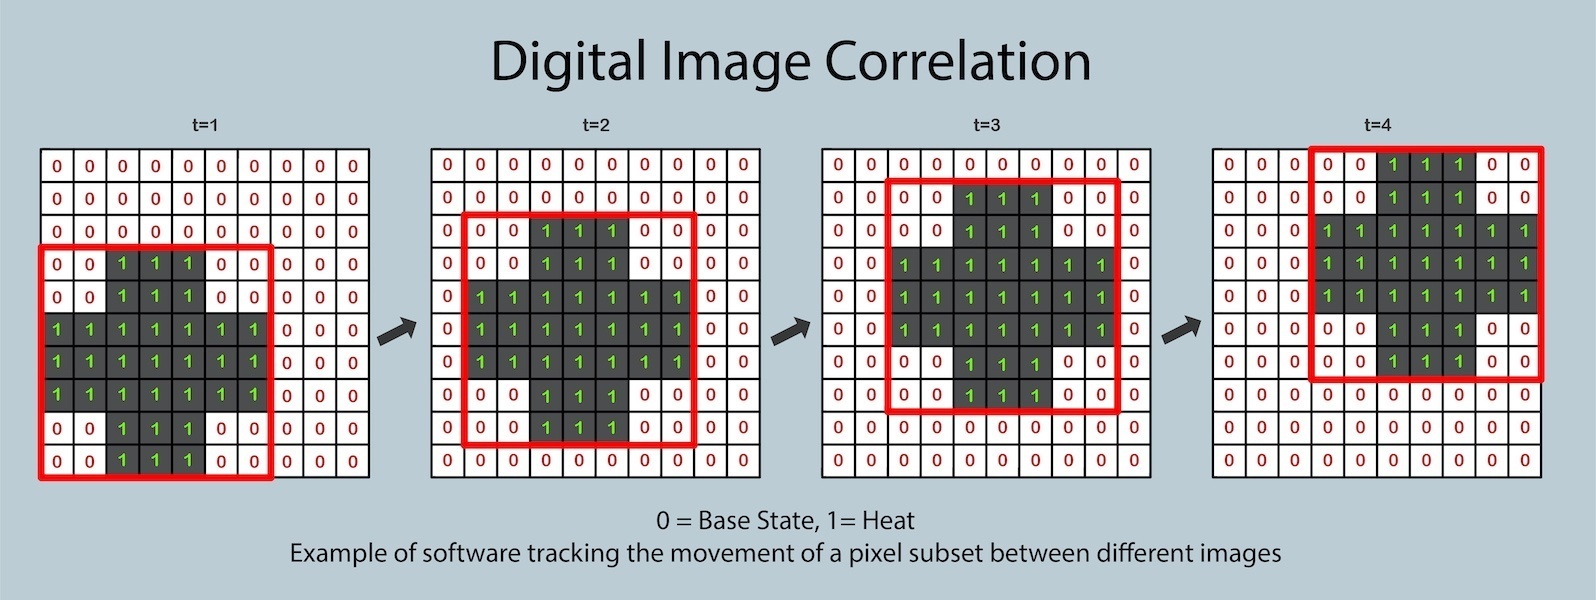 Digital-Image-Correlation-Infrared-copy-1